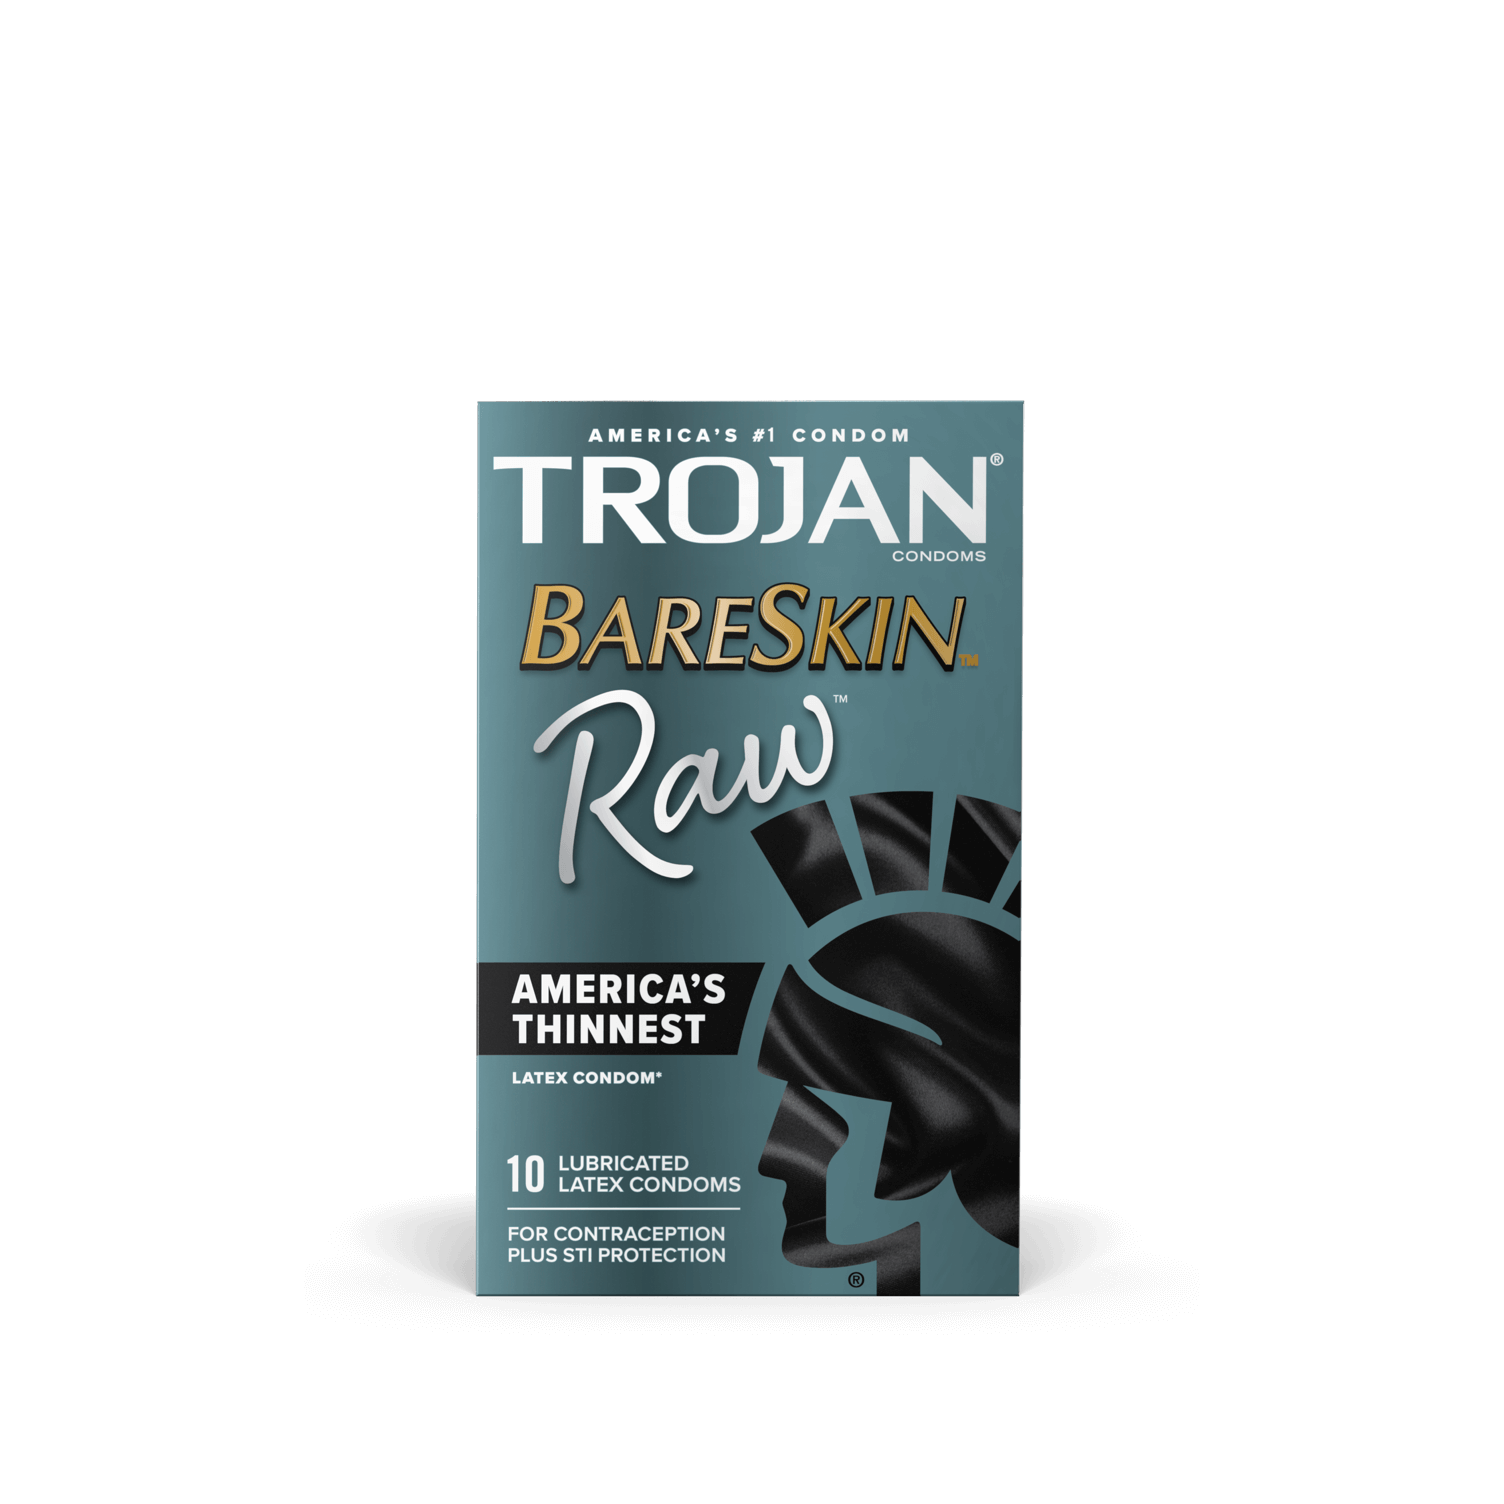 Trojan Bareskin Raw Condoms.